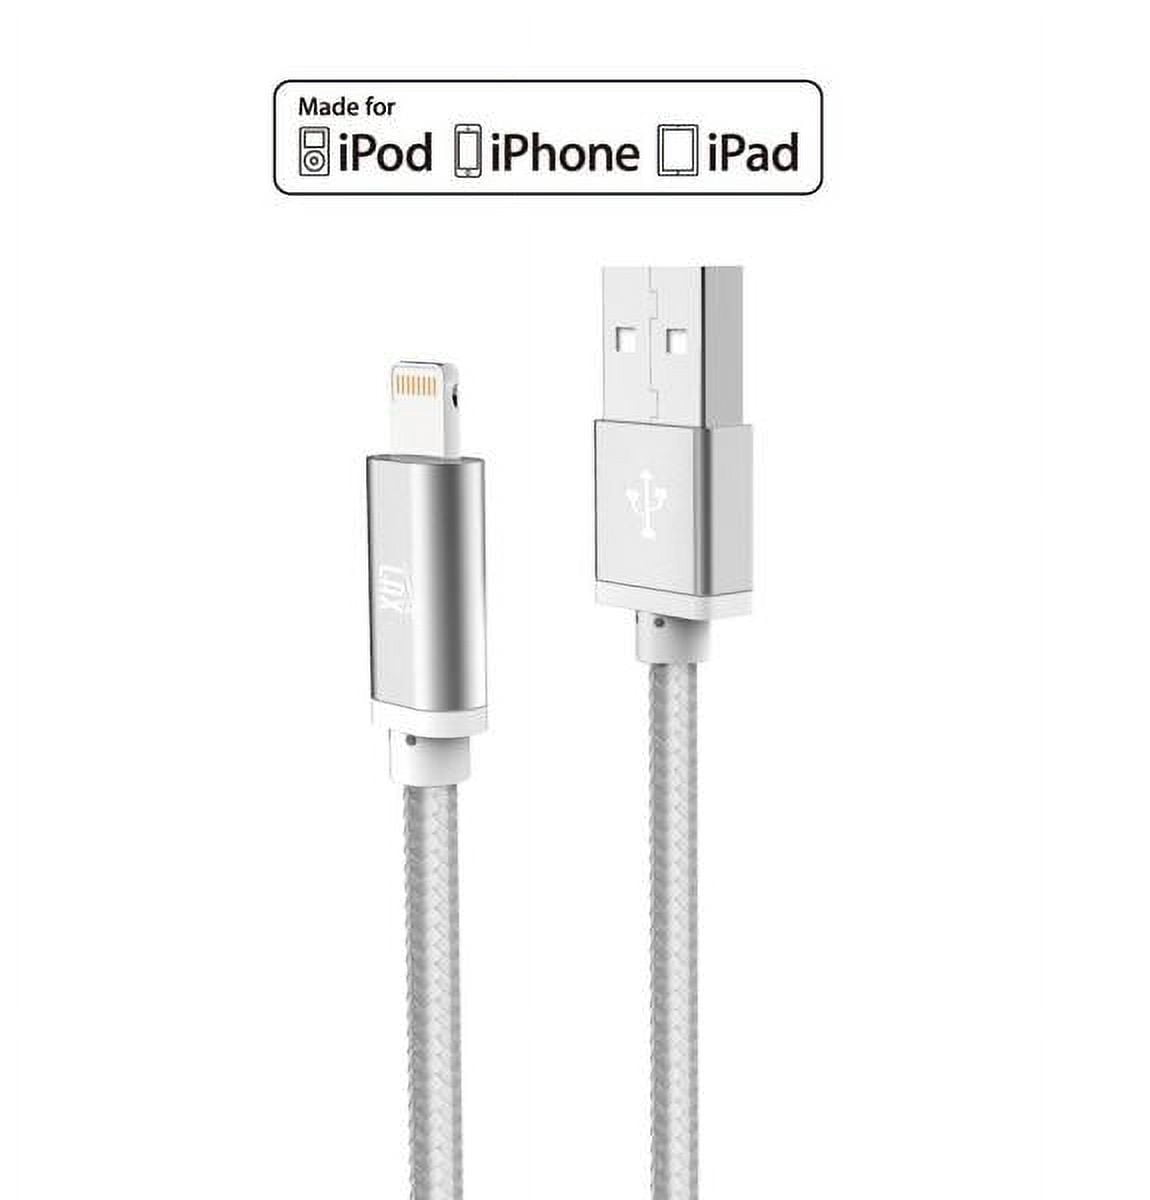 Cargador De Iphone 20Ft/6m [Certificado Por Apple Mfi] Cable Lightning  Extral